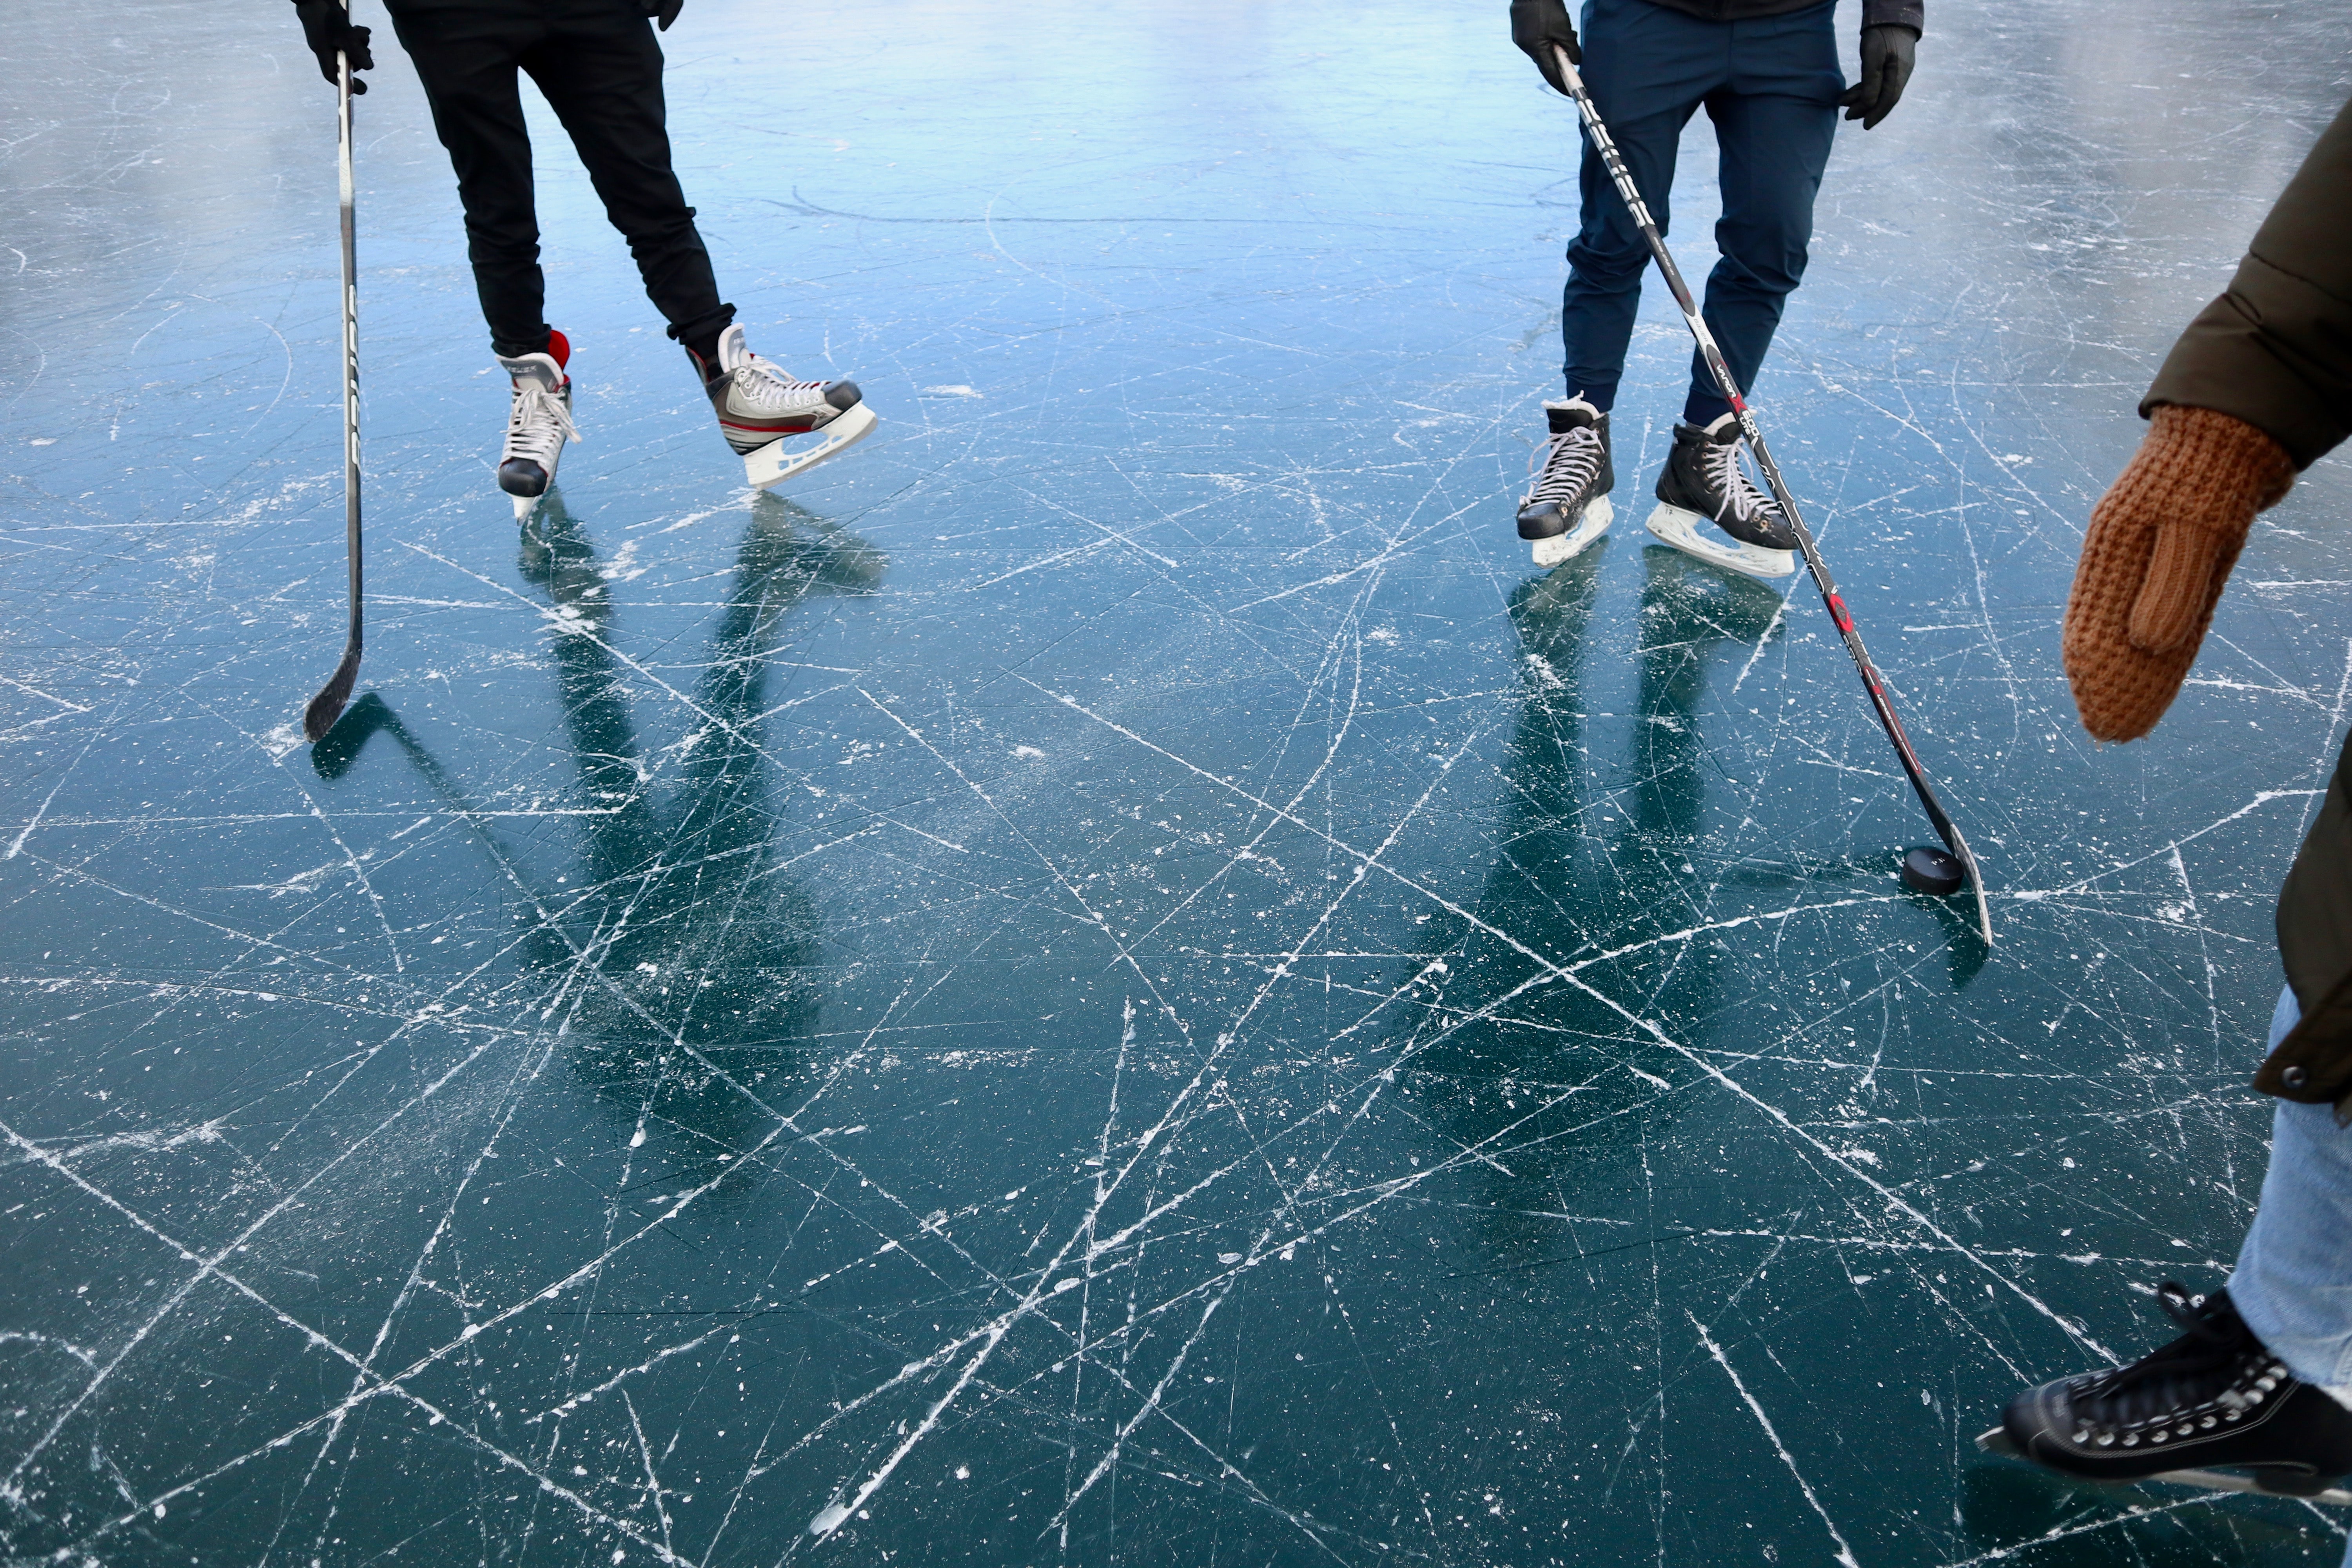 three persons playing ice hockey